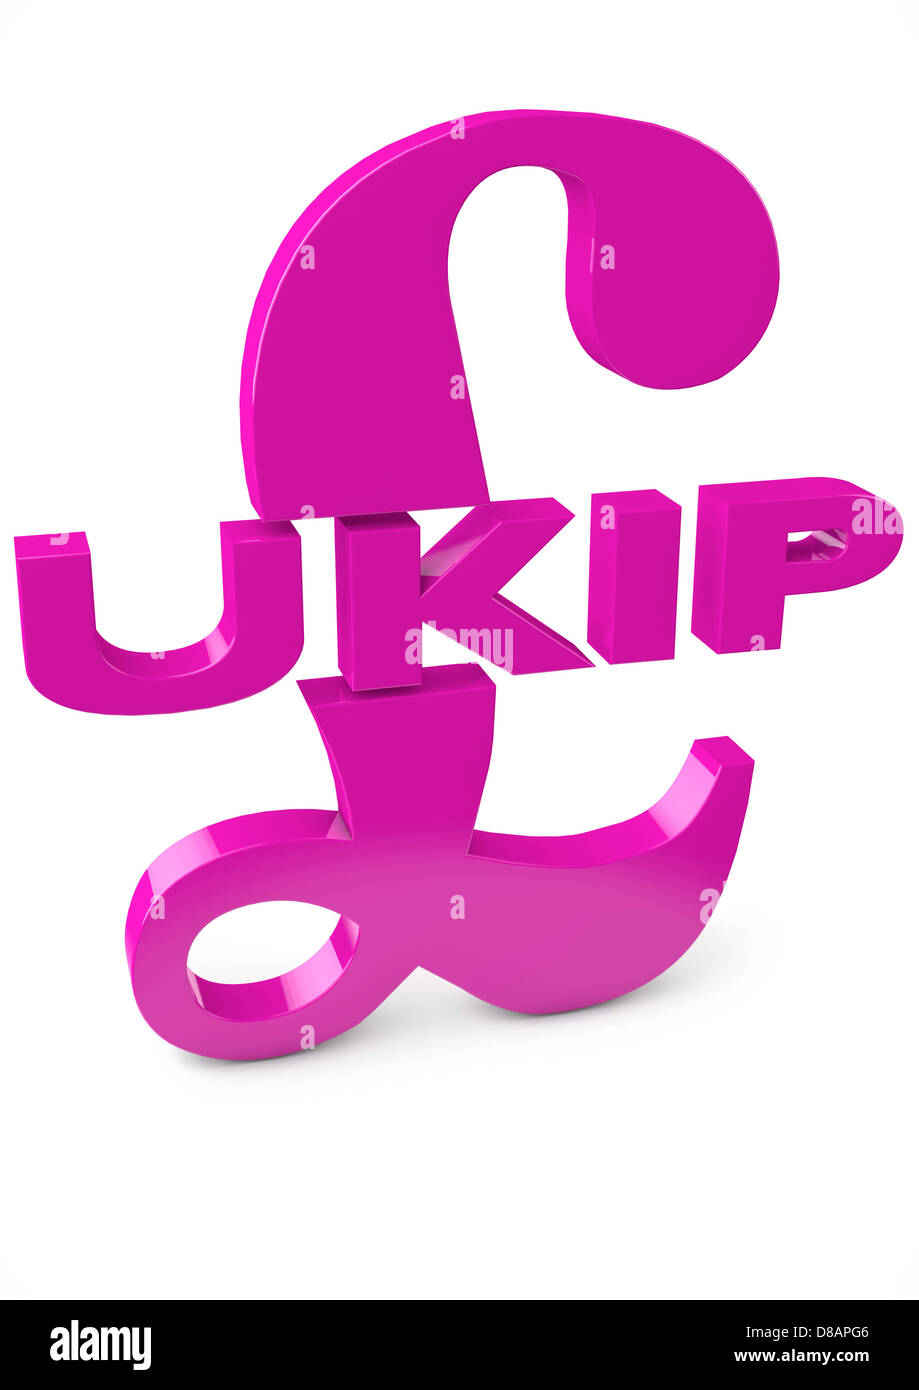 UKIP PARTY LOGO 3D Concept Stock Photo